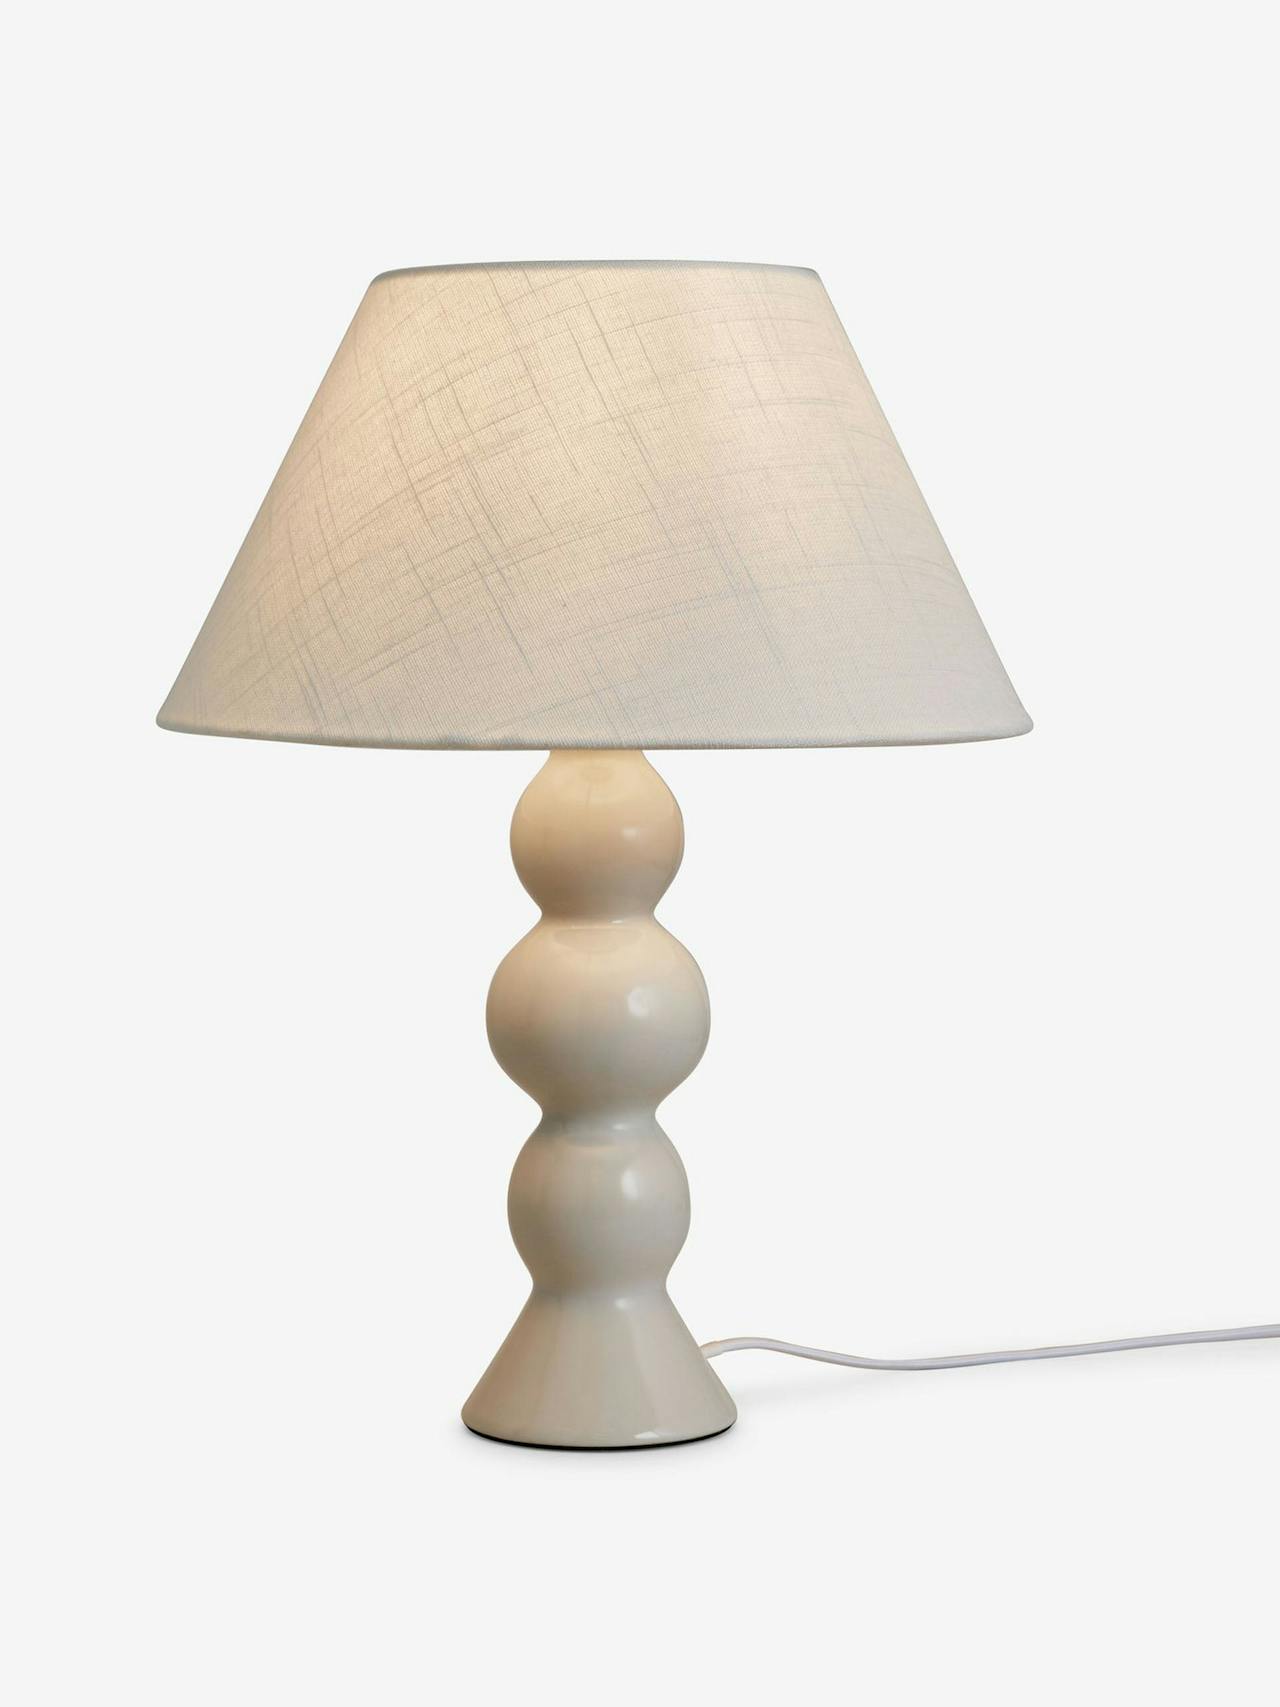 Sphere ceramic table lamp